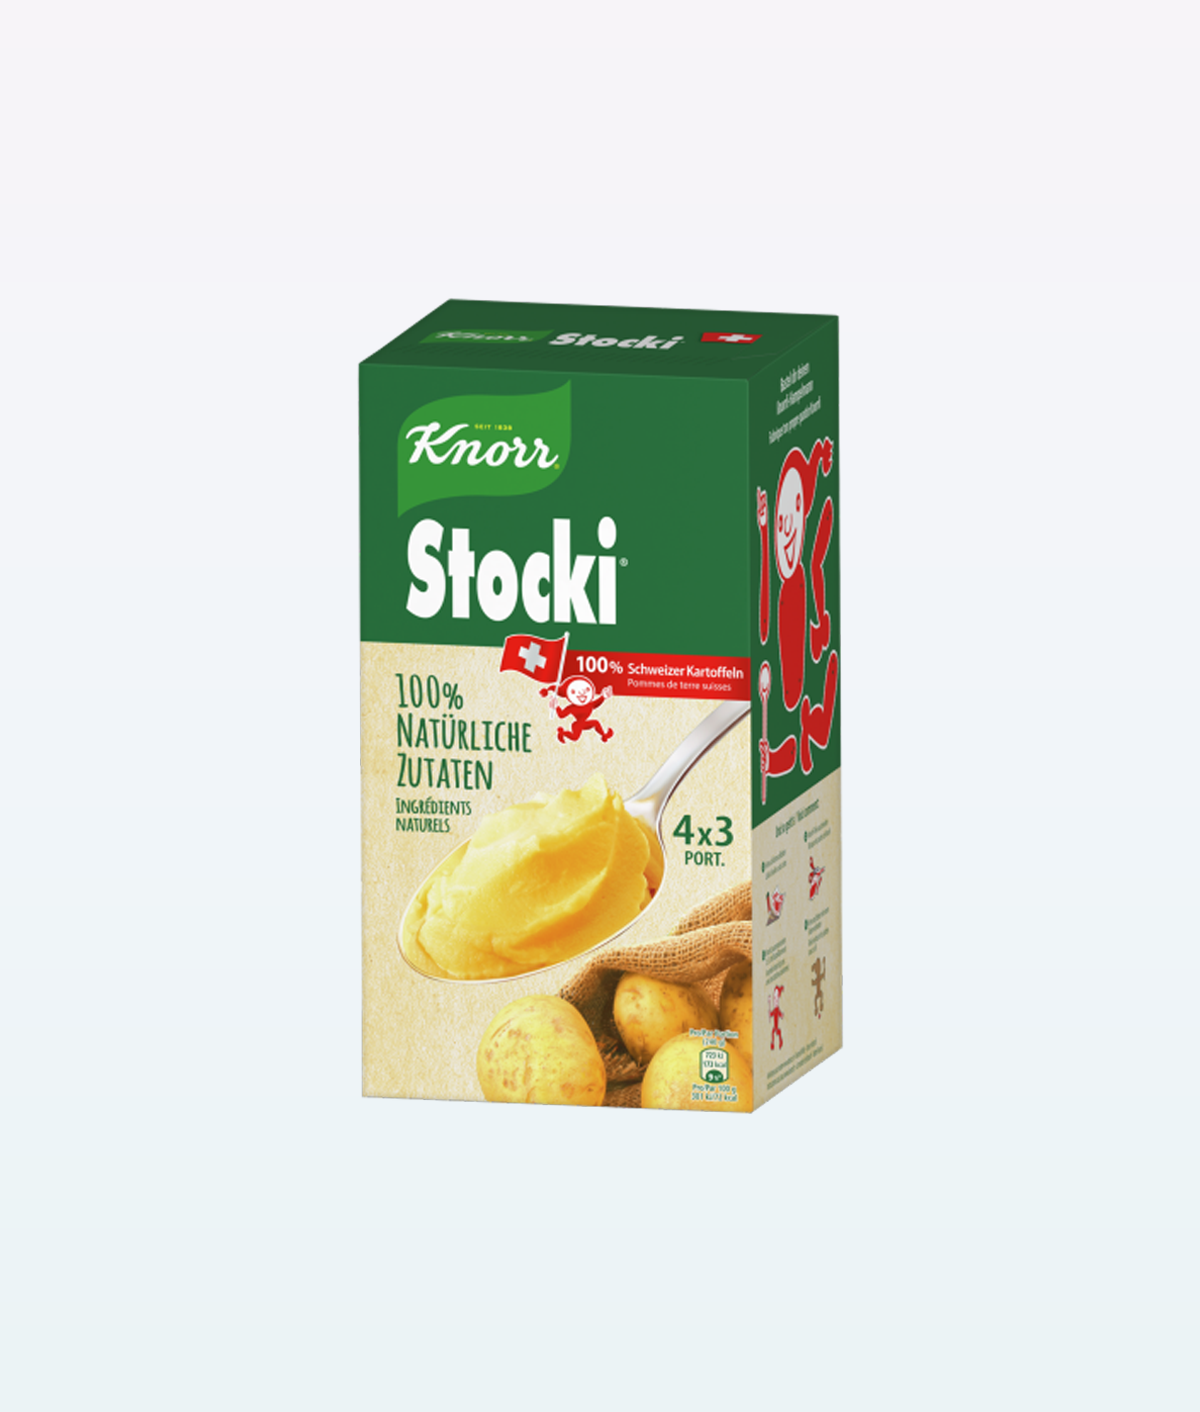 Knorr Stocki Potato 4×3 portion 440g